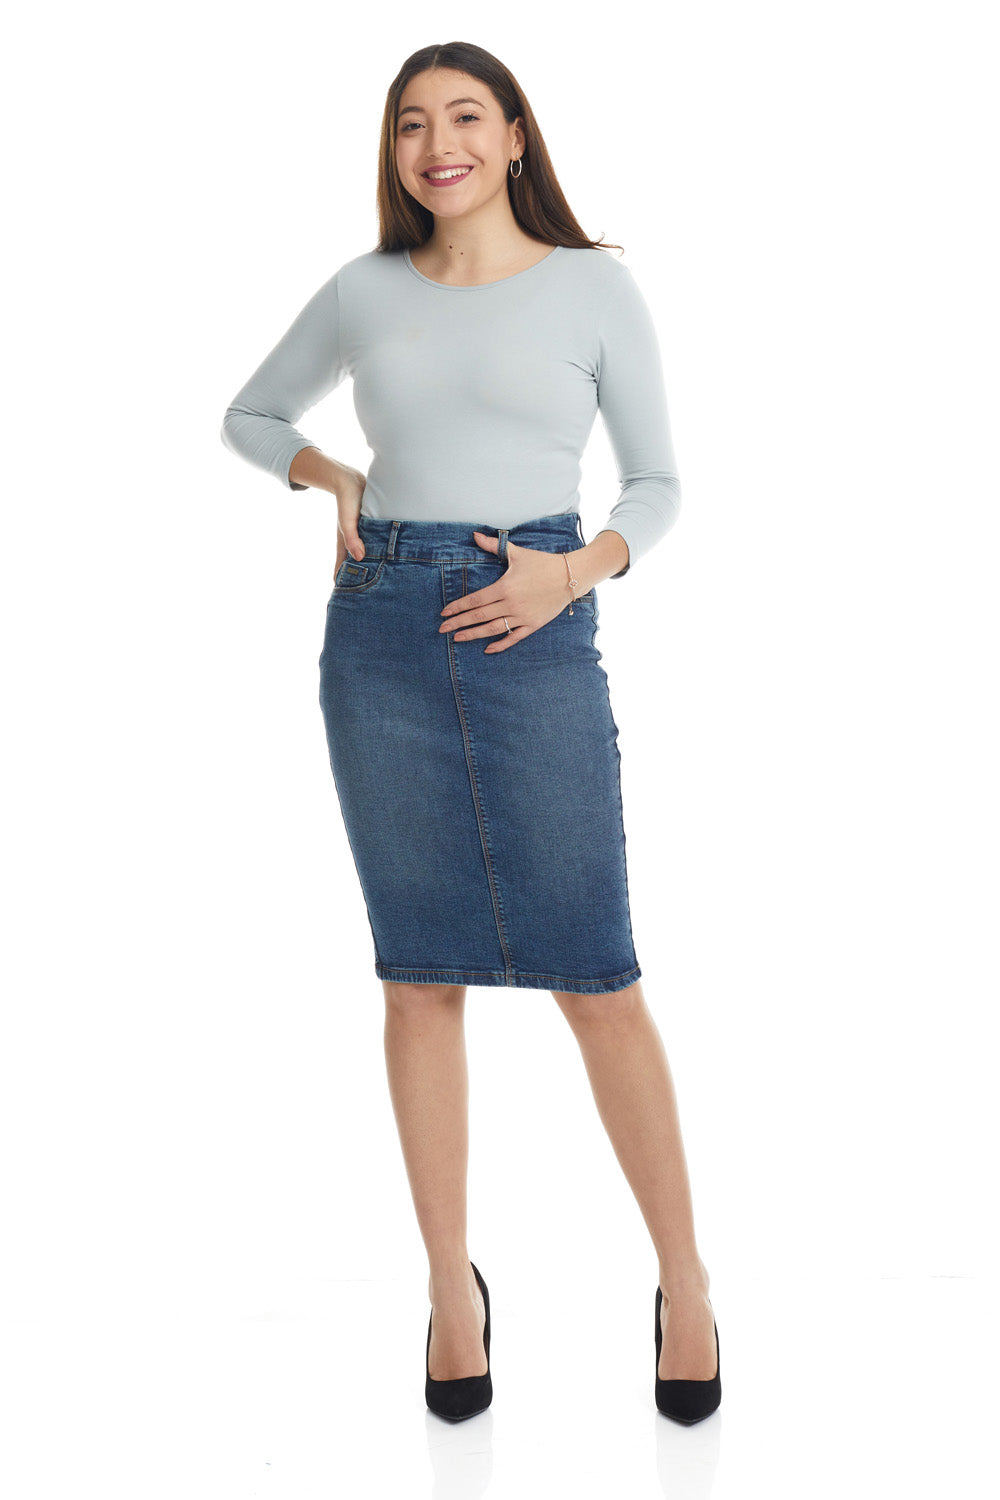 classic blue modest tight pencil skirt